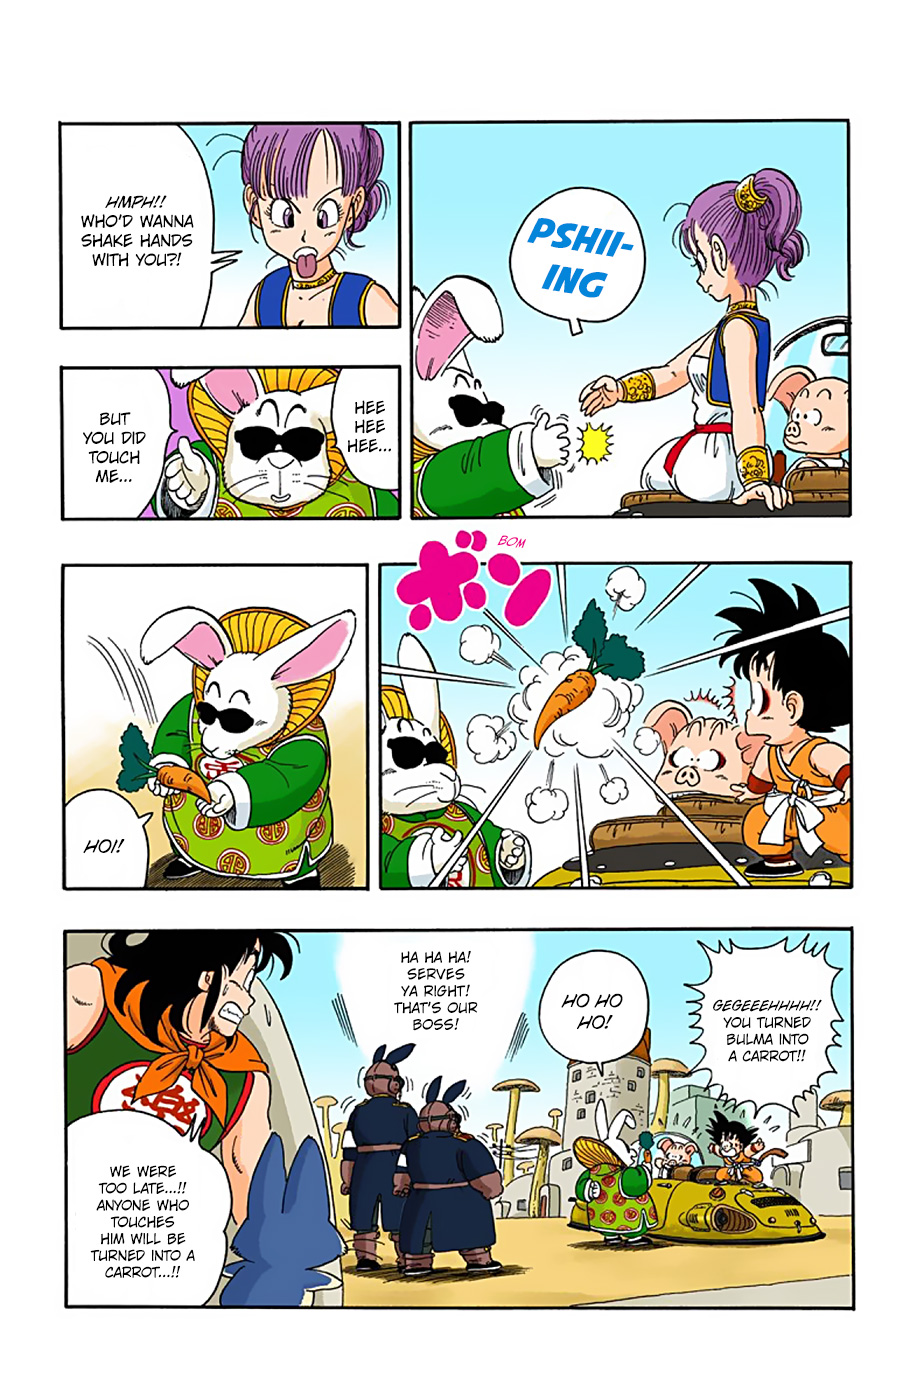 Dragon Ball Full Color Edition Vol. 2 Ch. 17